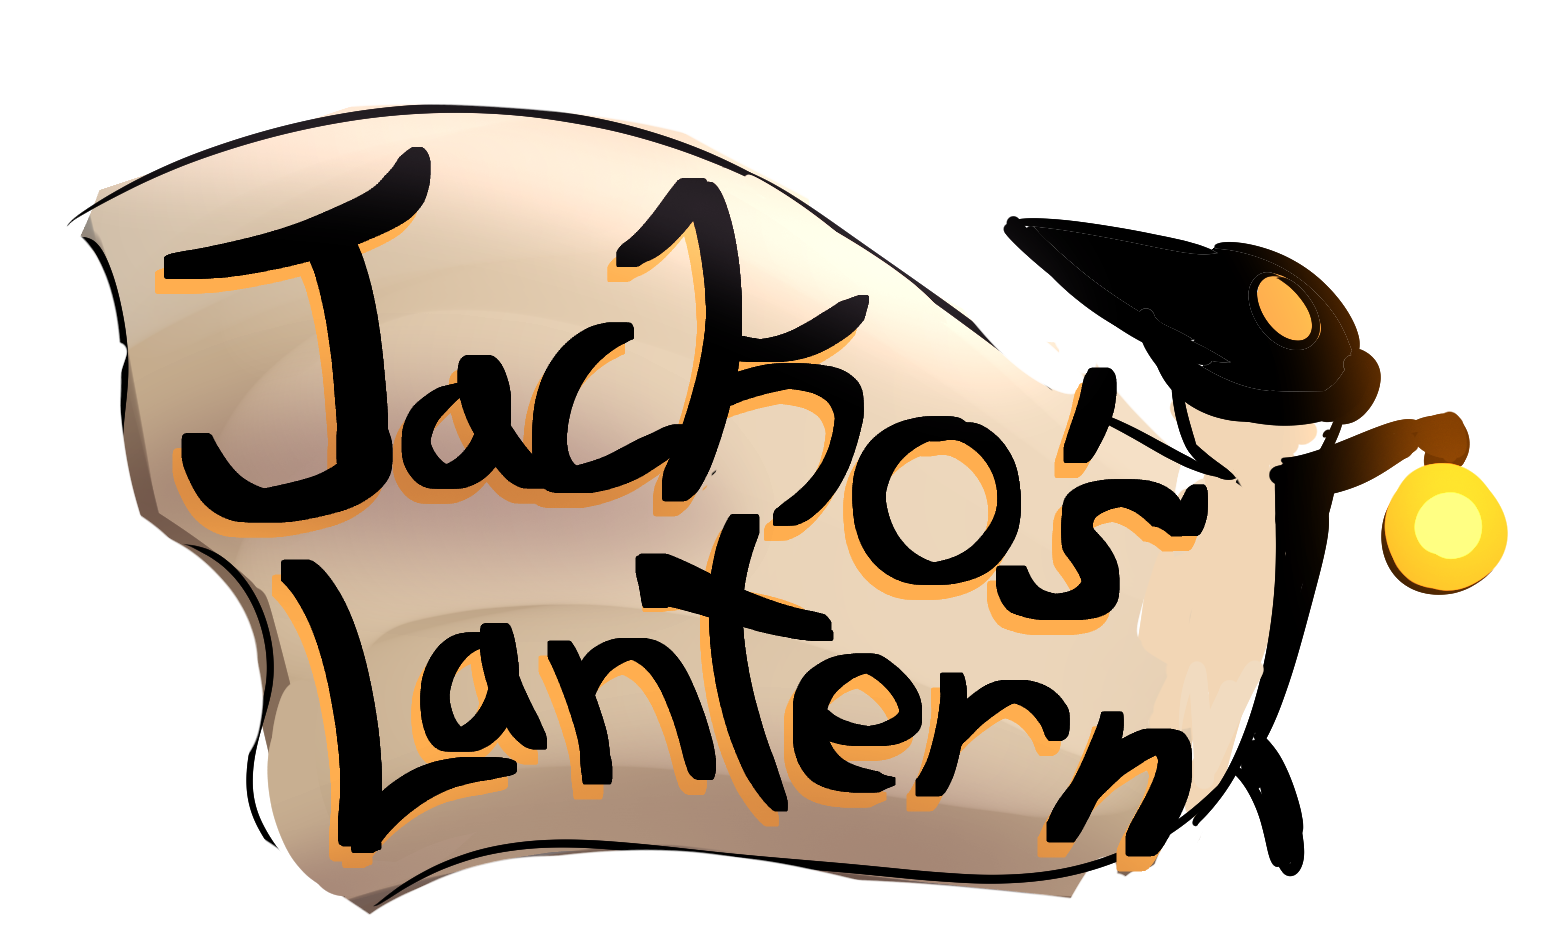 Jacko's Lantern